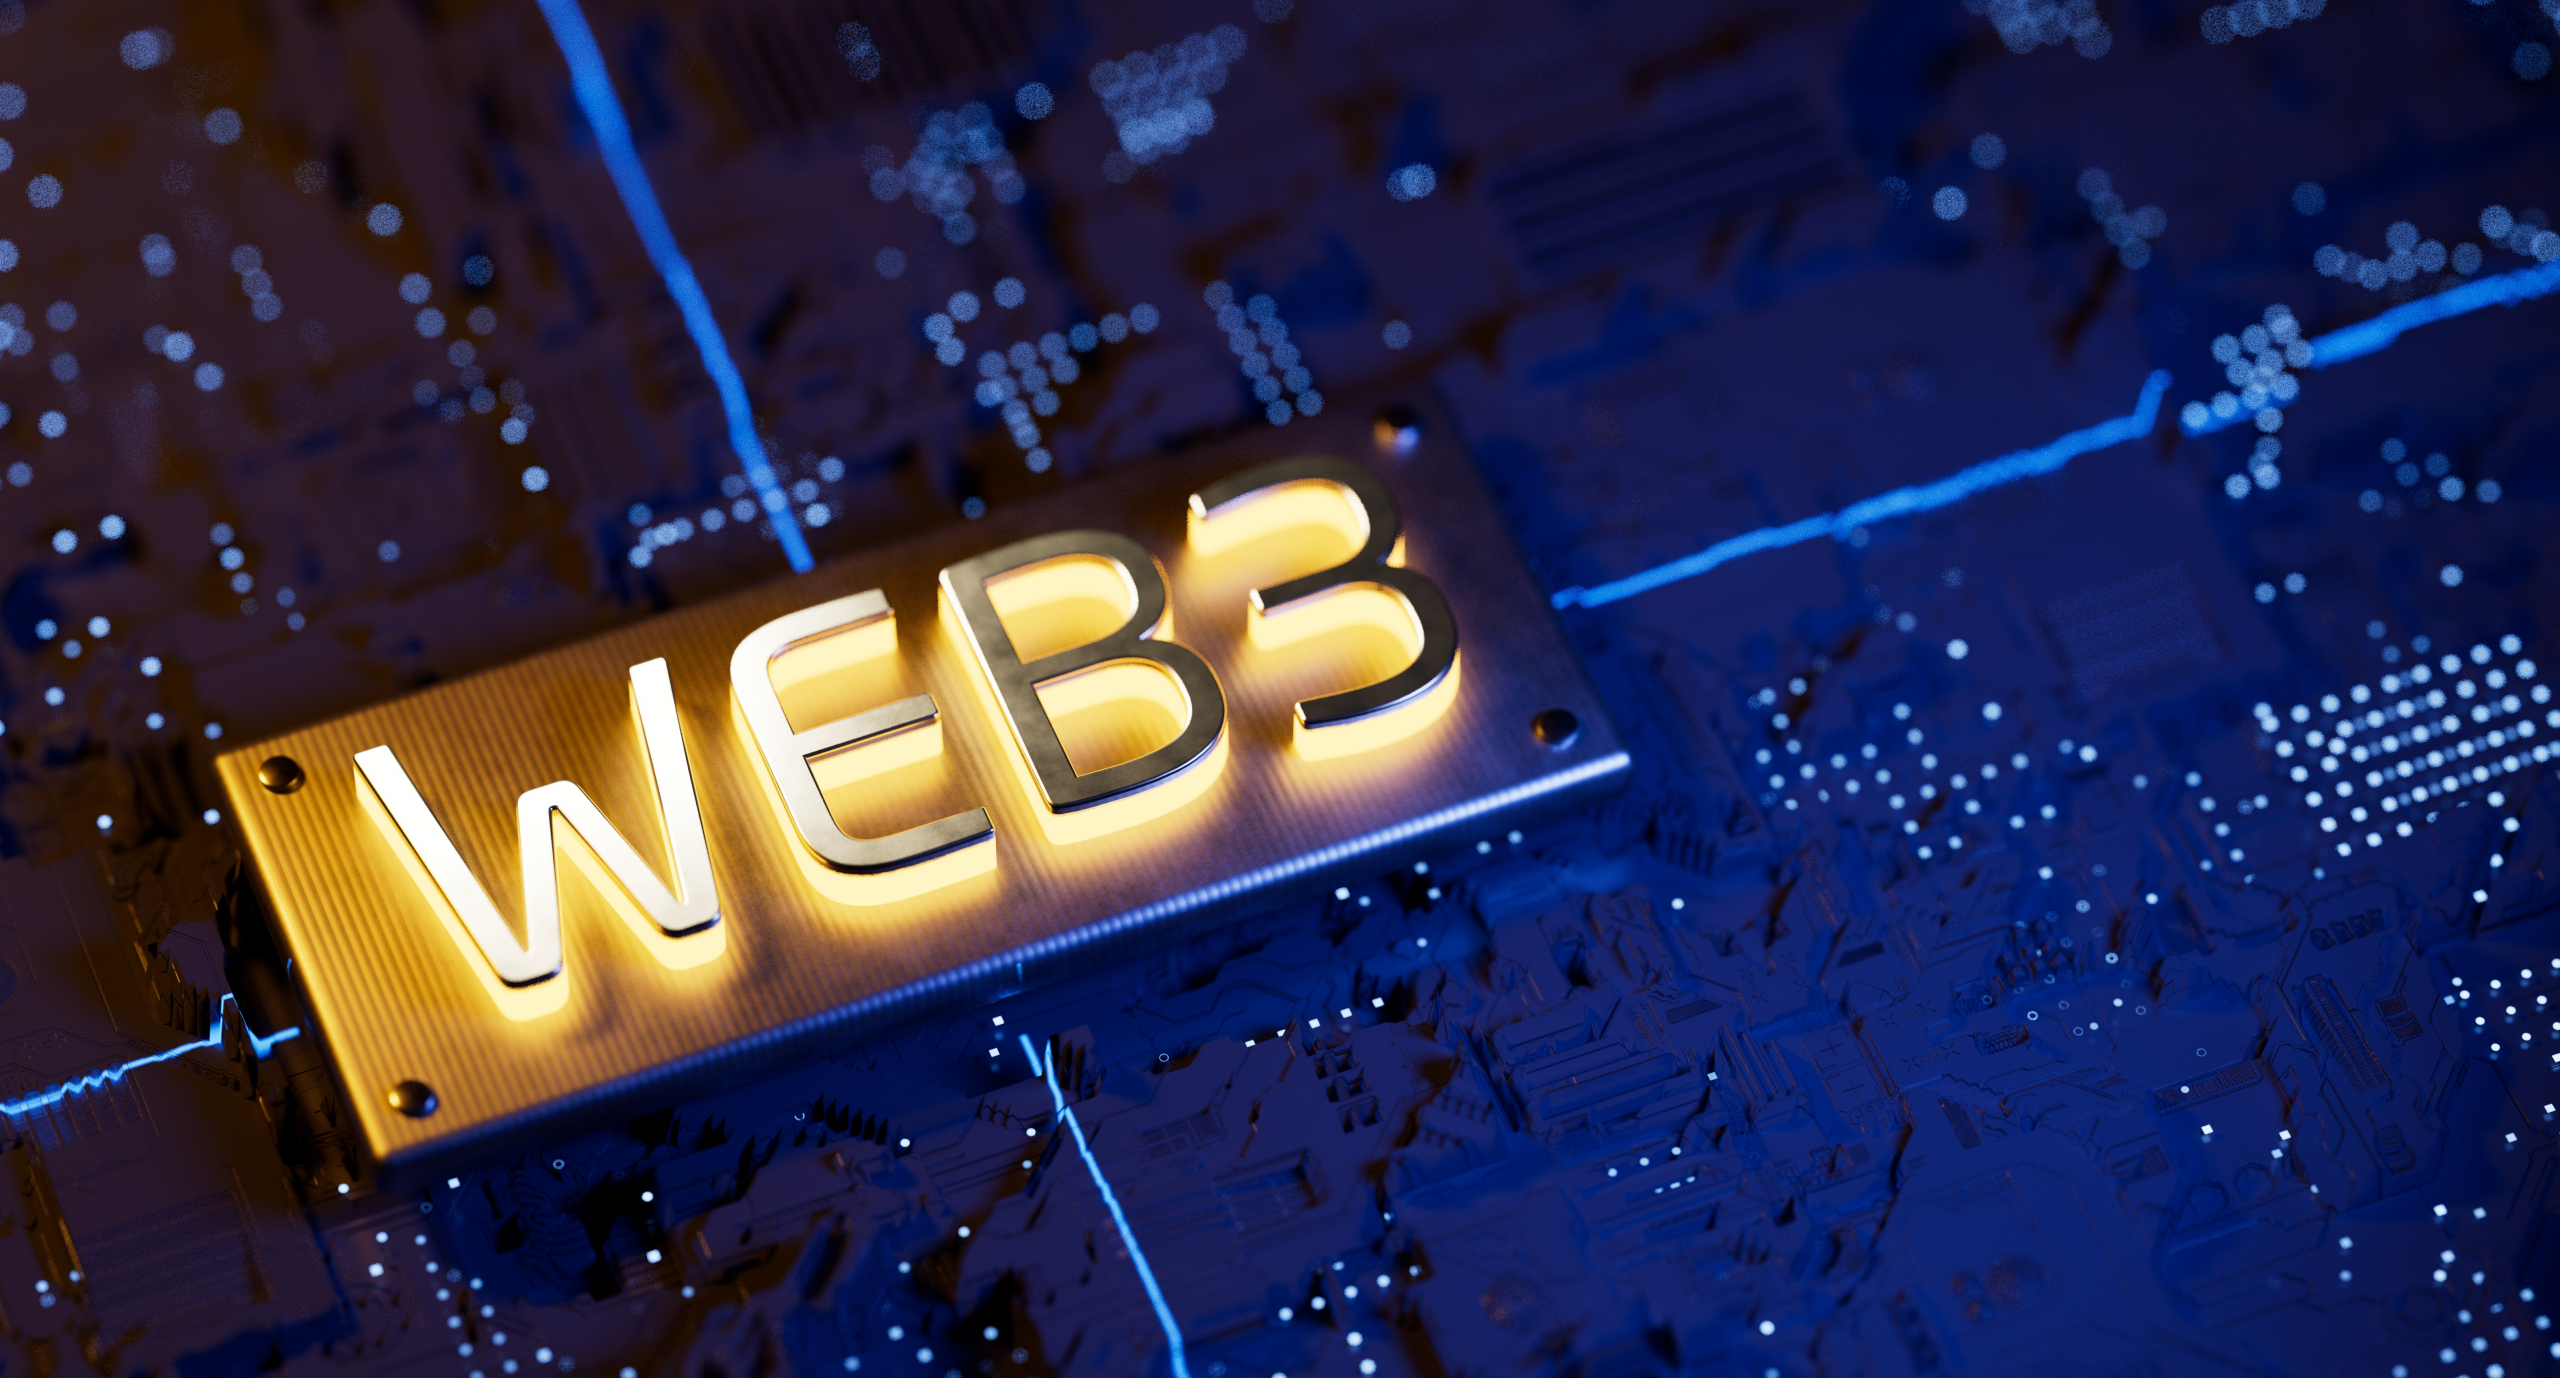 Uniswap Labs Raises $165M as Attention Shifts to Web3 & NFTs